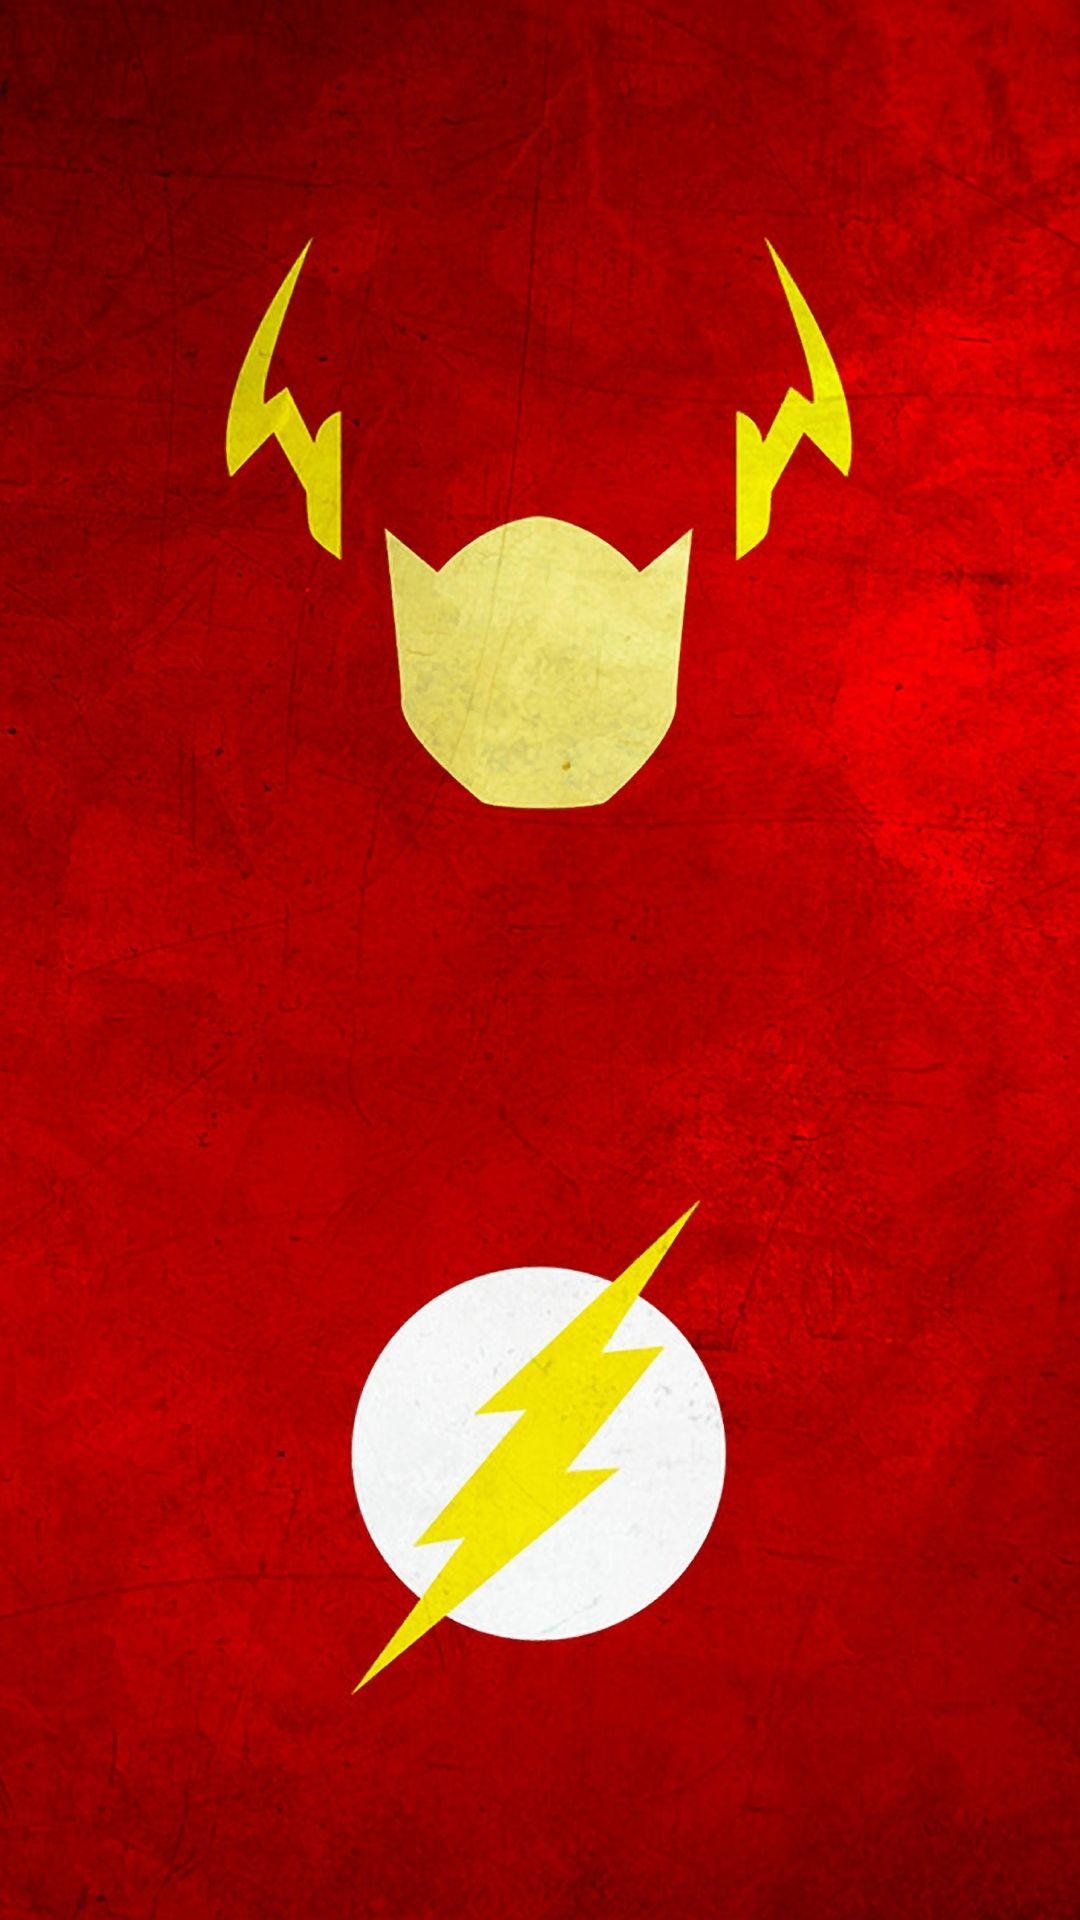 Superhero Phone Wallpaper Free .wallpaperaccess.com